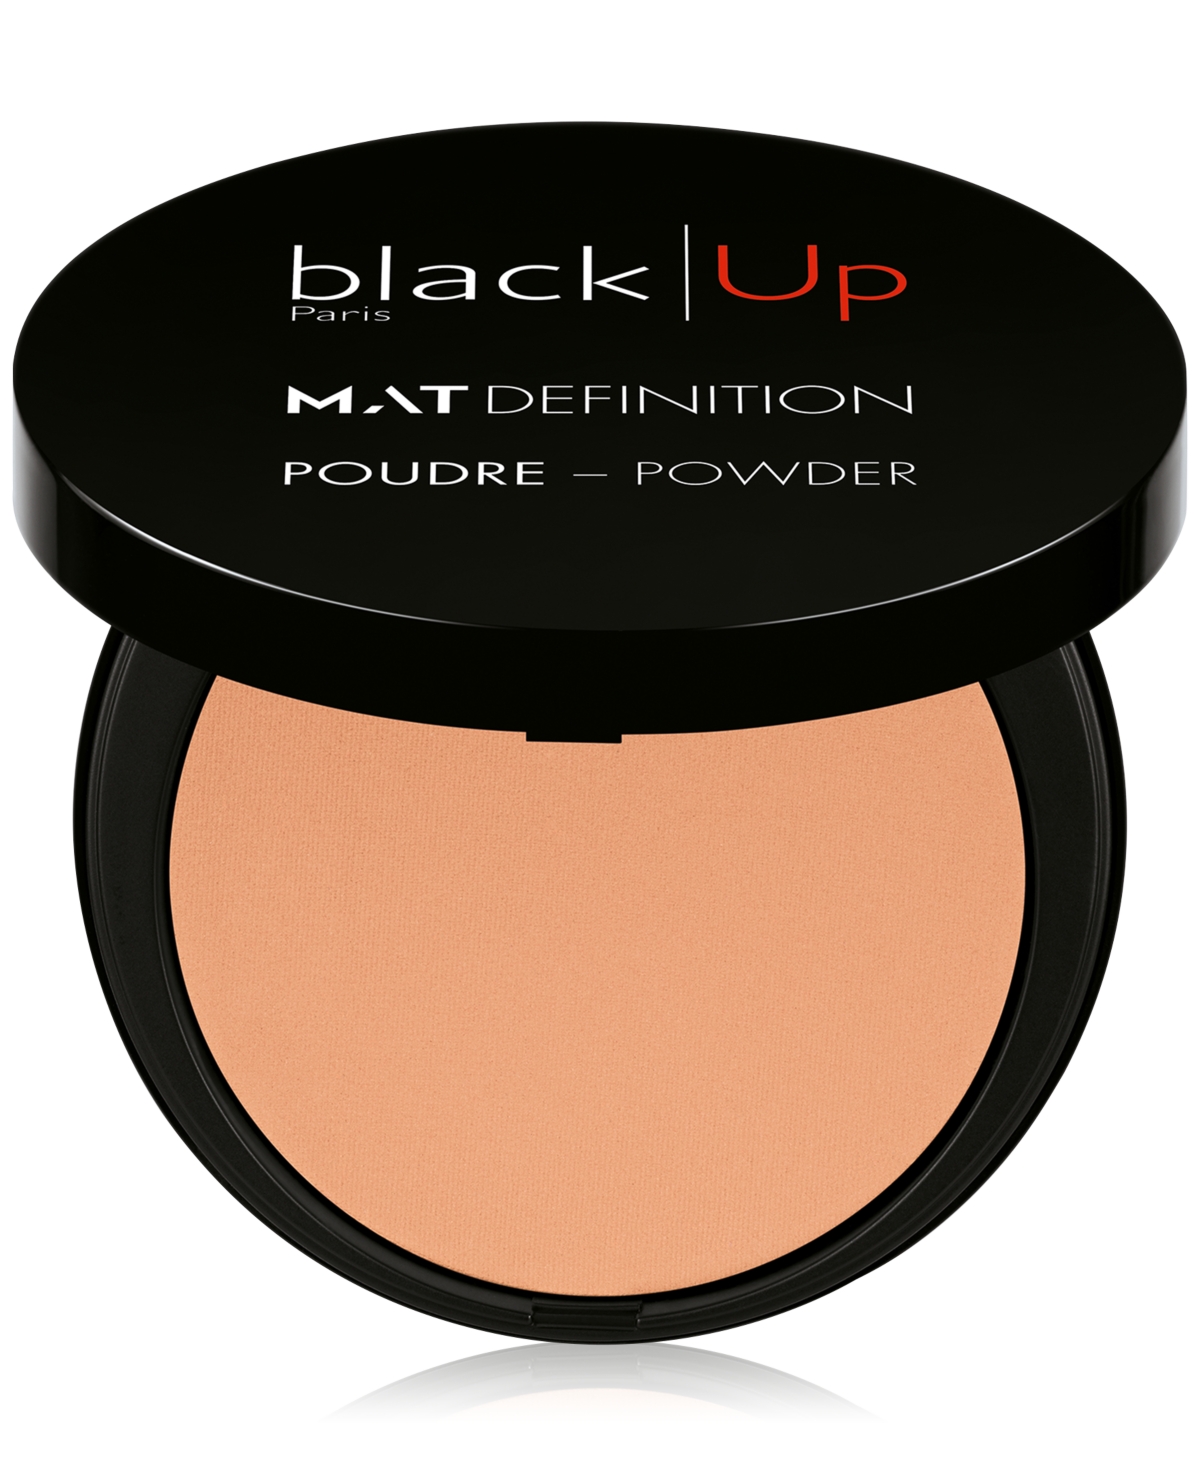 Matte Definition Universal Powder - MDP Universal Shade